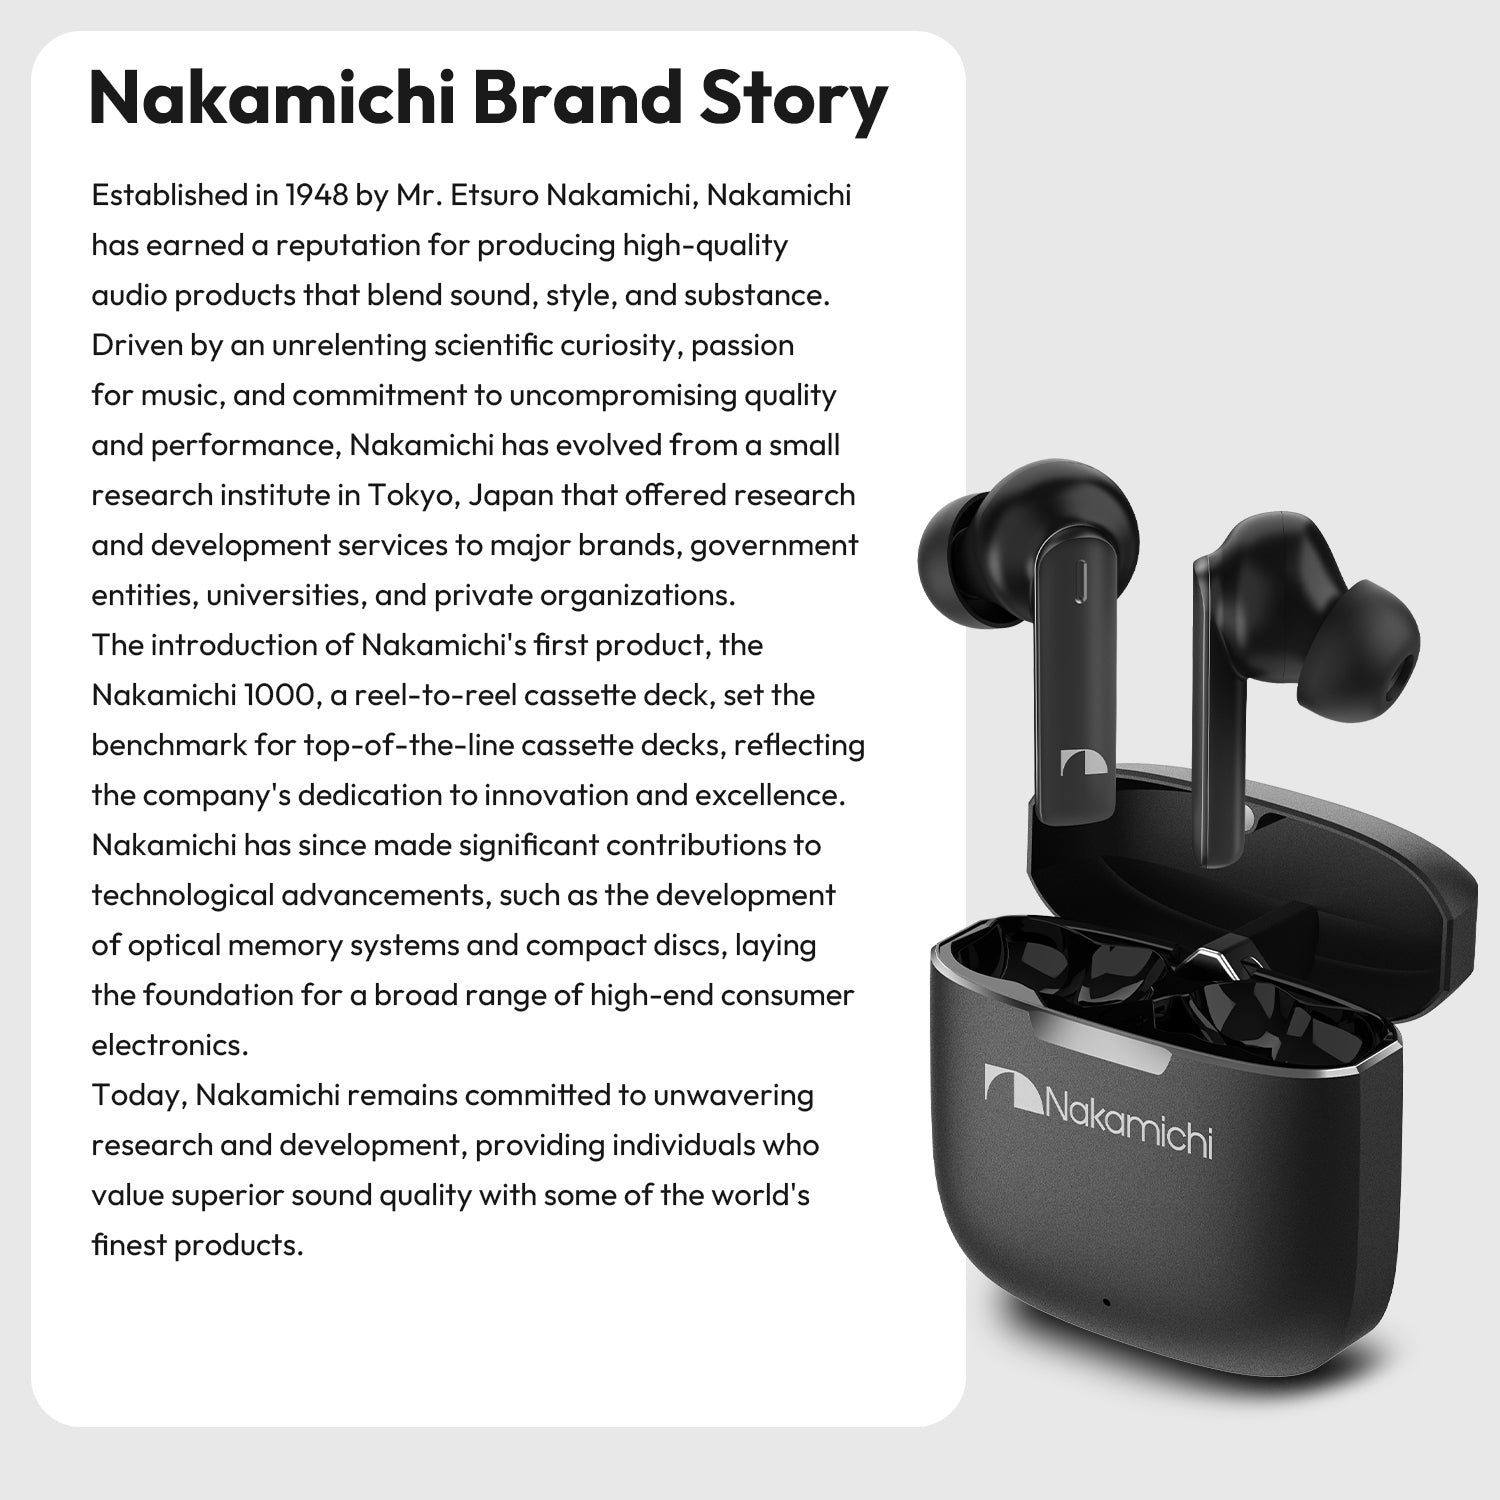 Nakamichi P800 Hybrid ANC True Wireless Earbuds